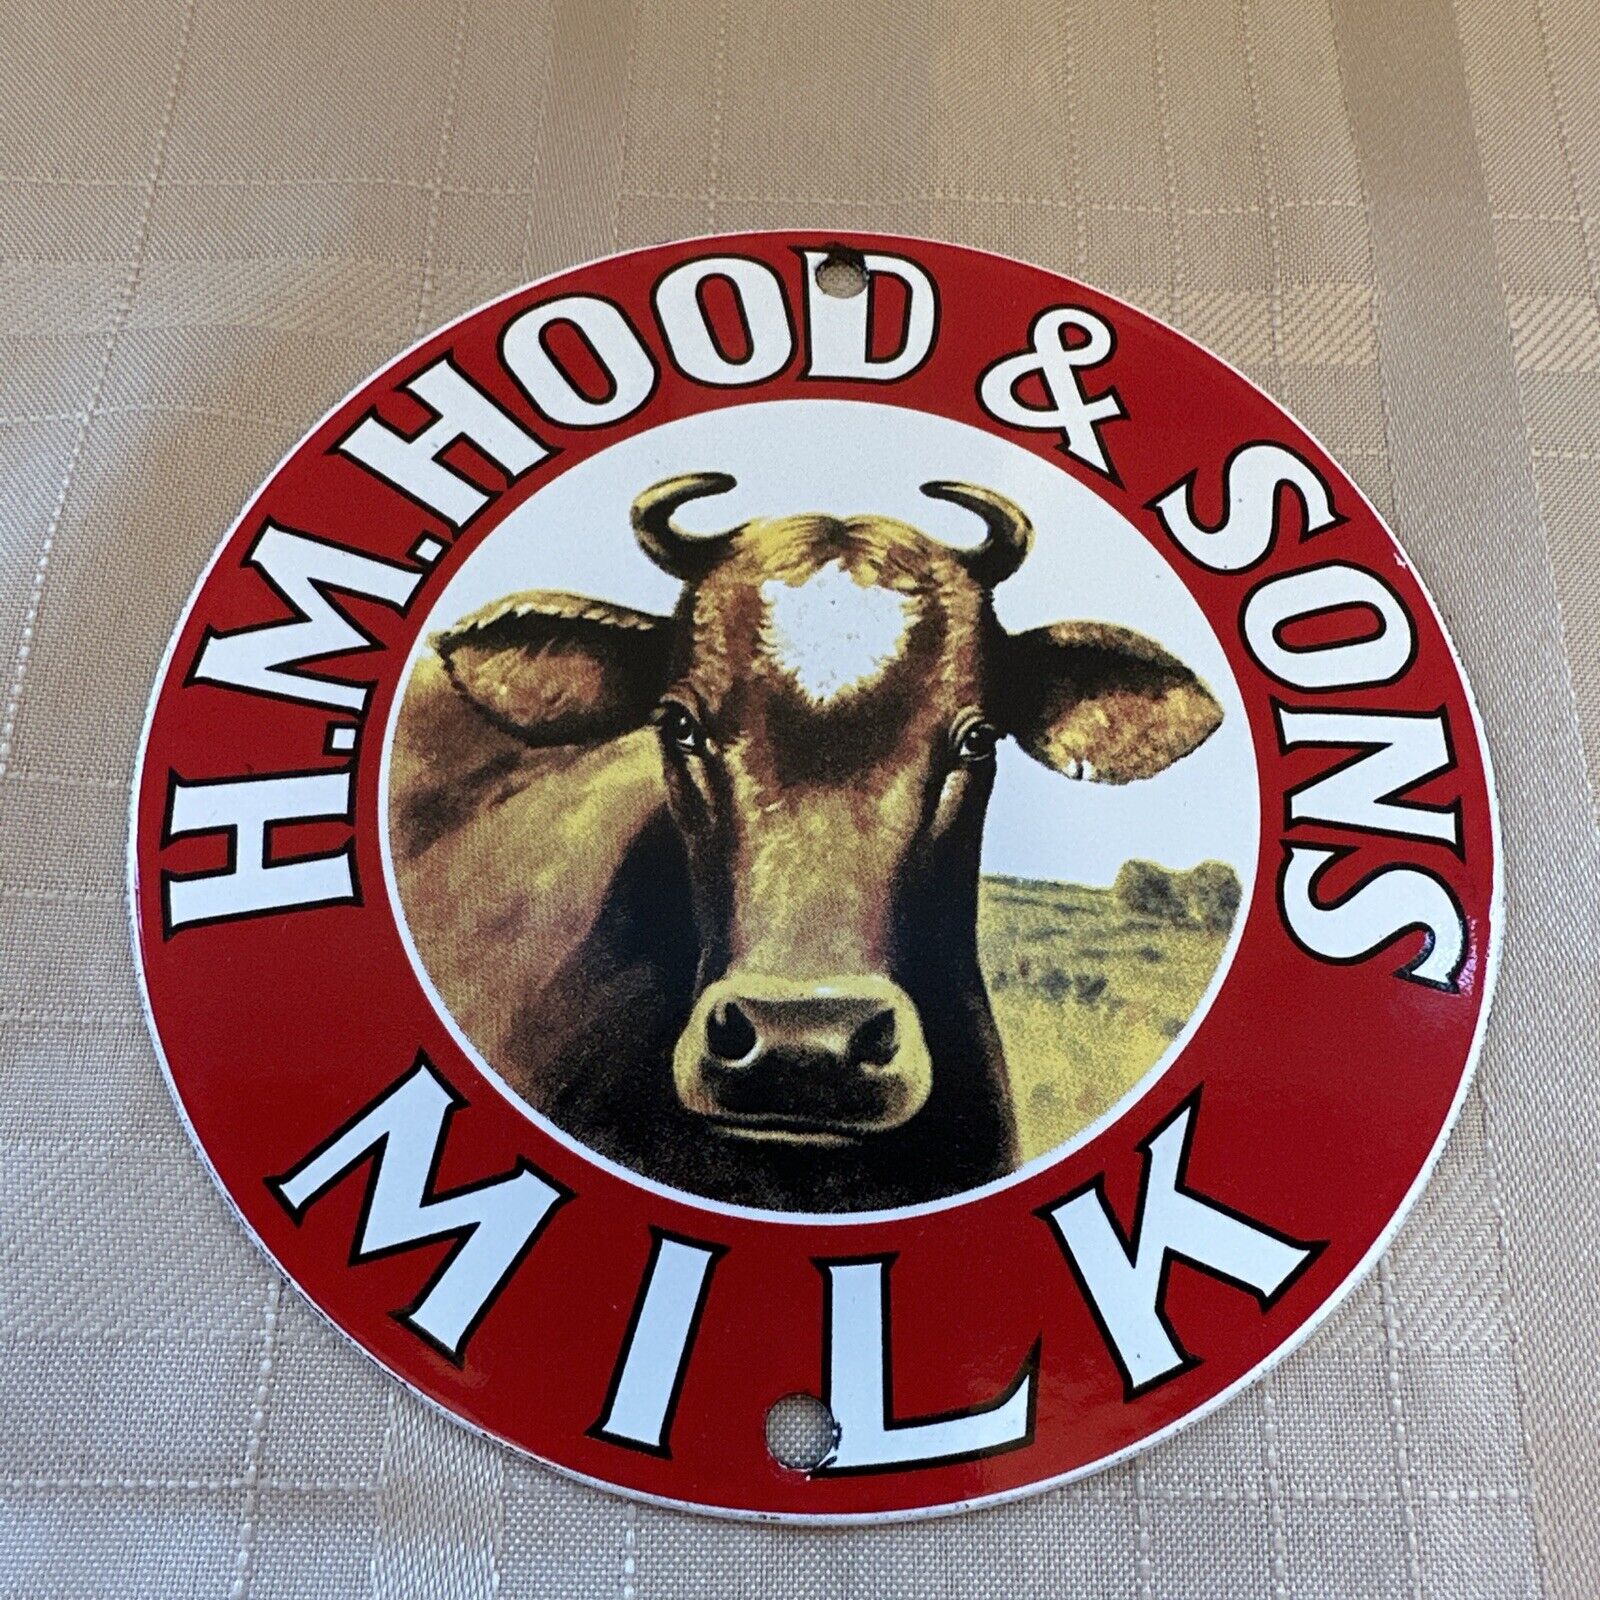 HM Hood & Sons Milk Dairy Farm Cow Porcelain Metal Enamel Sign